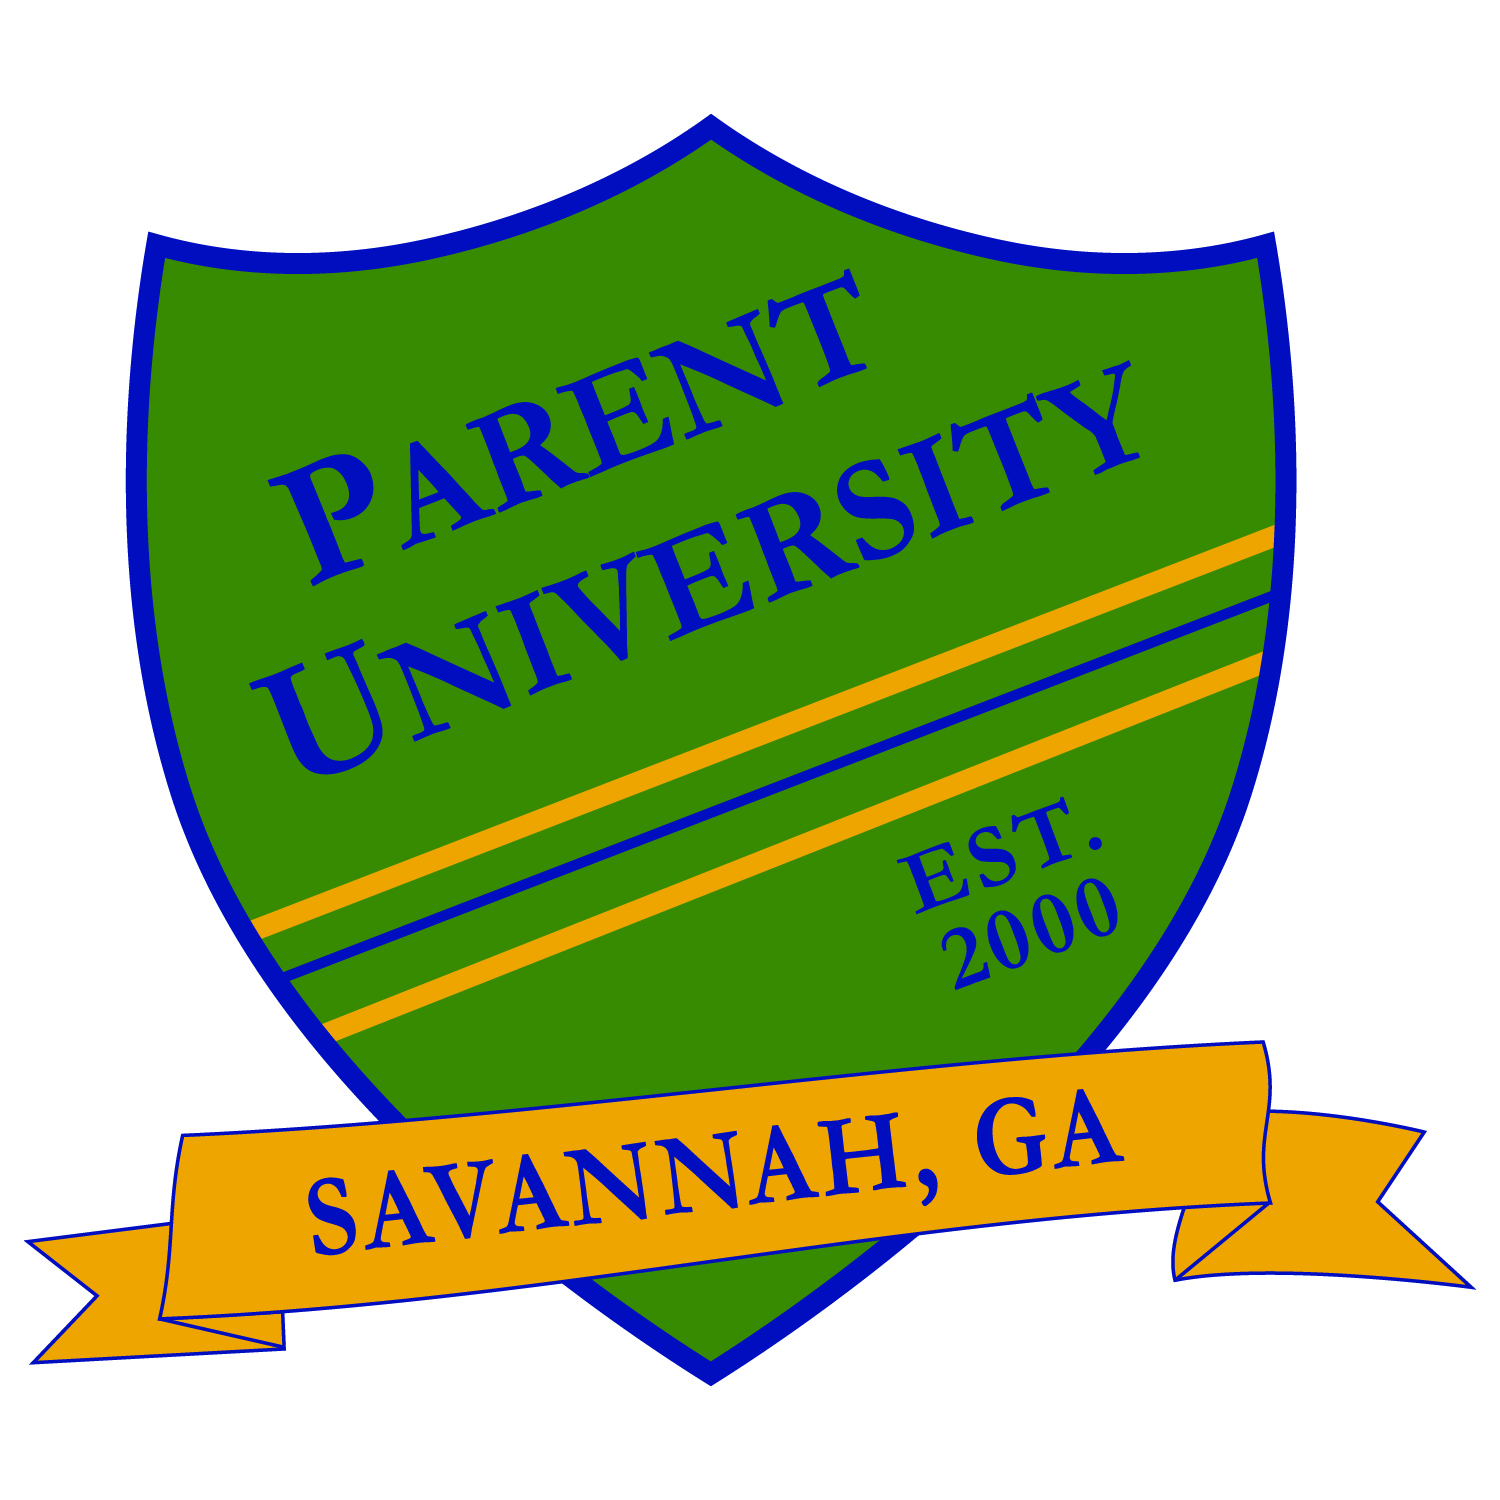 Parent University Logo